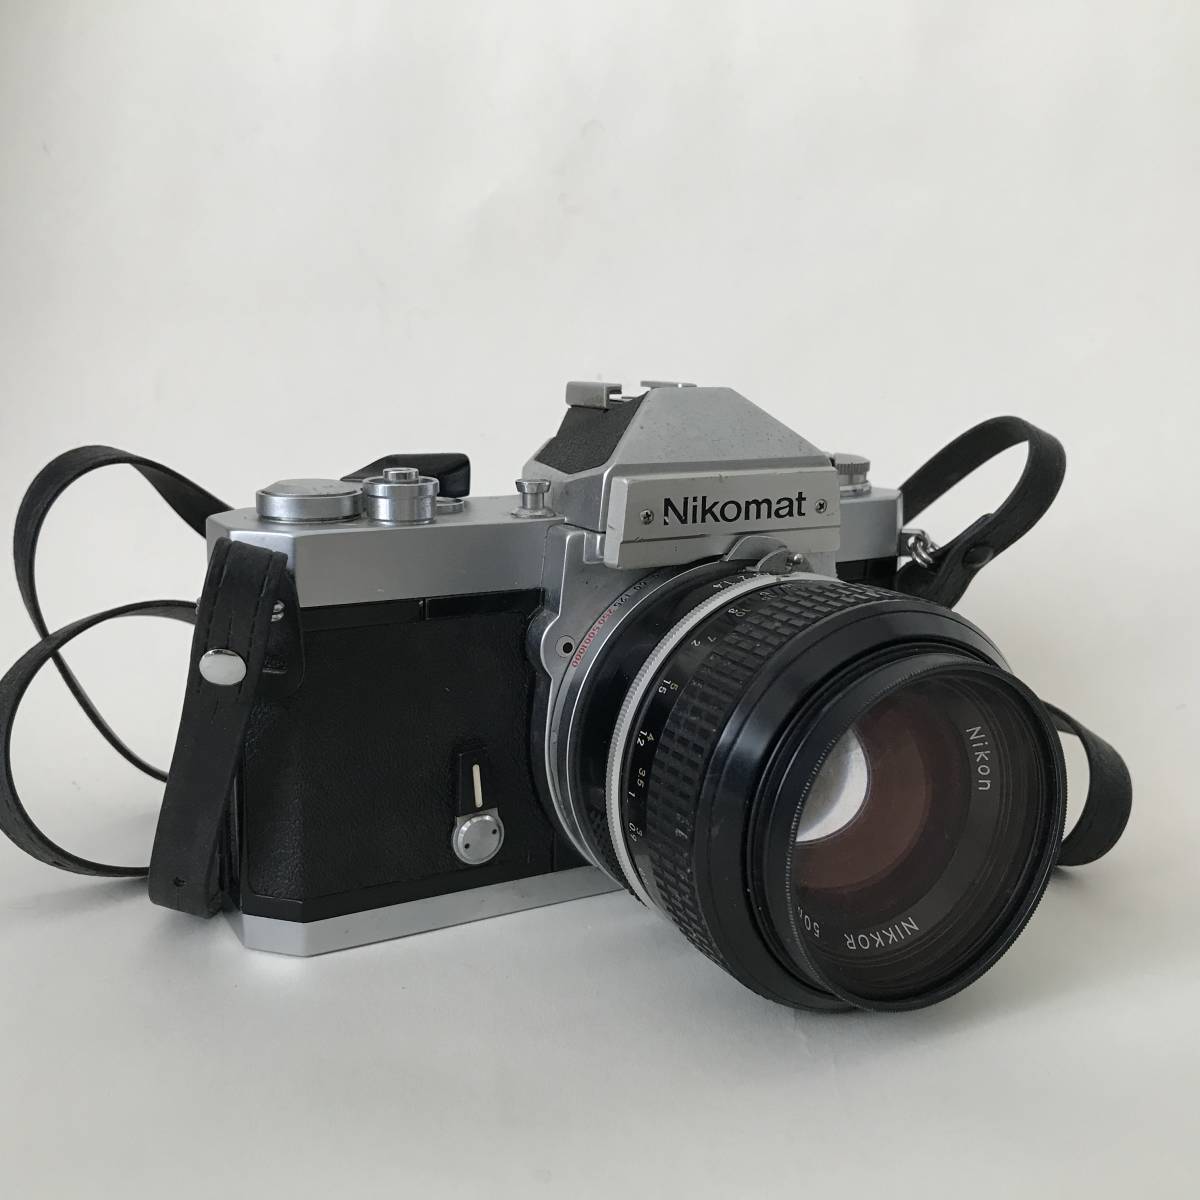 ② Nikomat Nikon ニコン フィルムカメラ ボディ レンズ ヴィンテージ vintage camera film camera 日本製 made in JAPAN 古いもの 現状品_画像1